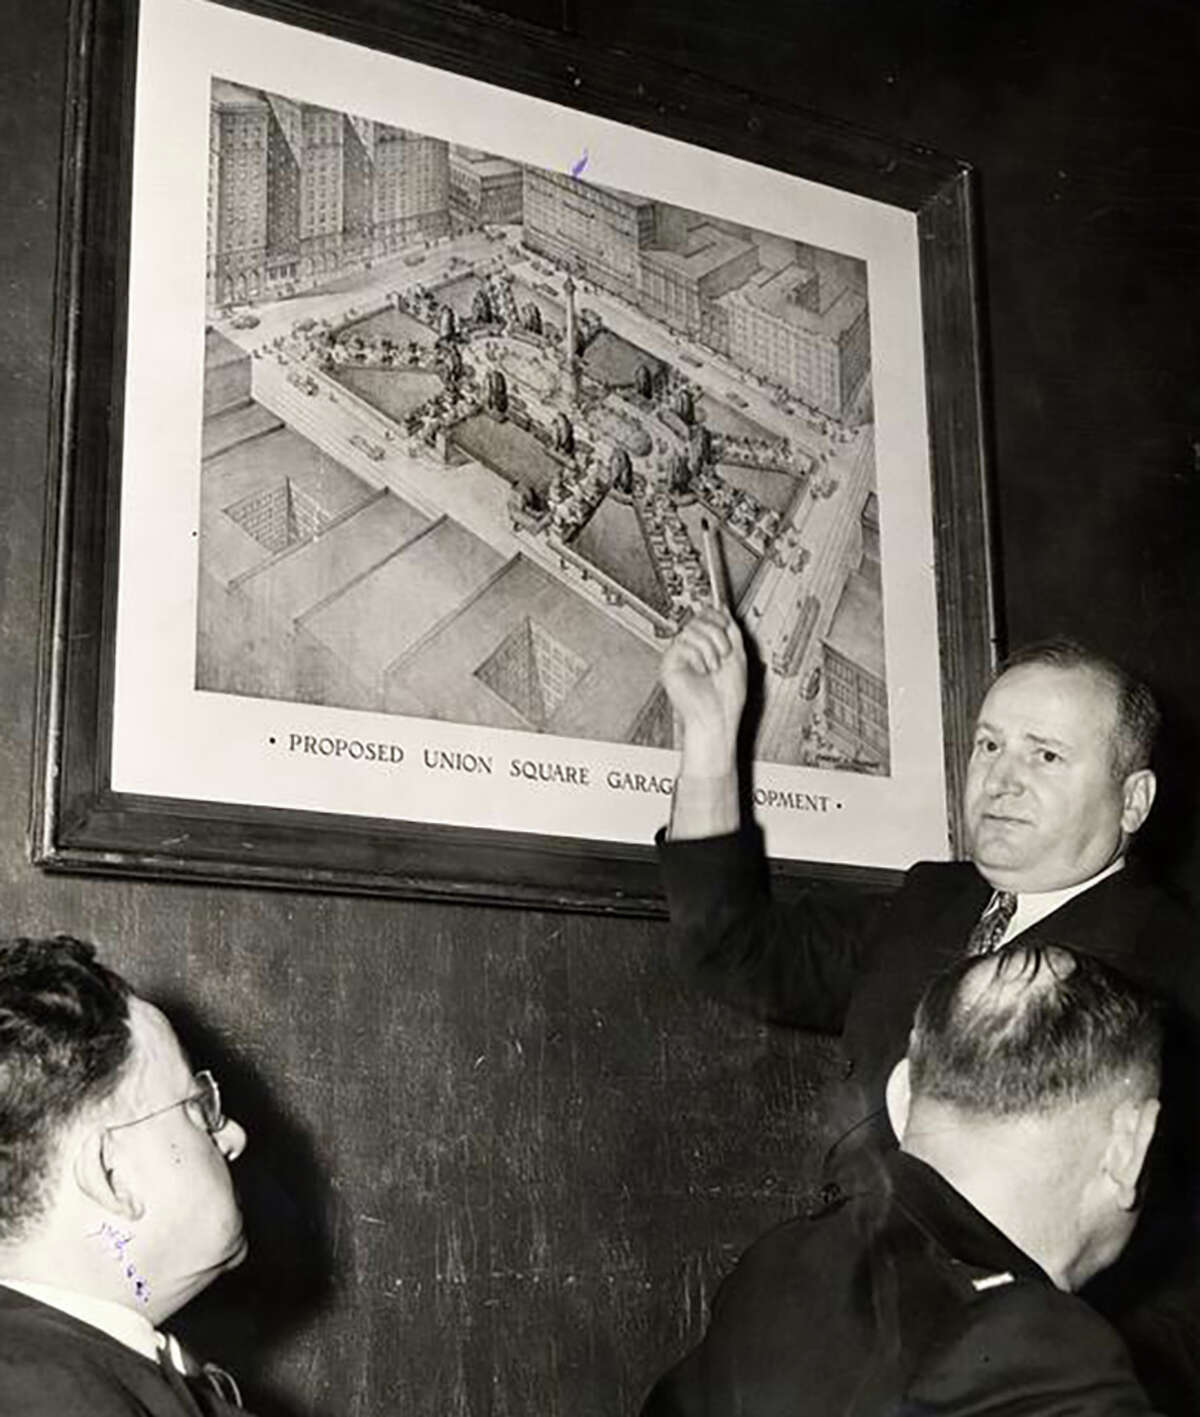 Timothy Pflueger, upper right, explaining plans for proposed Union Square parking garage, Dec. 12, 1940.